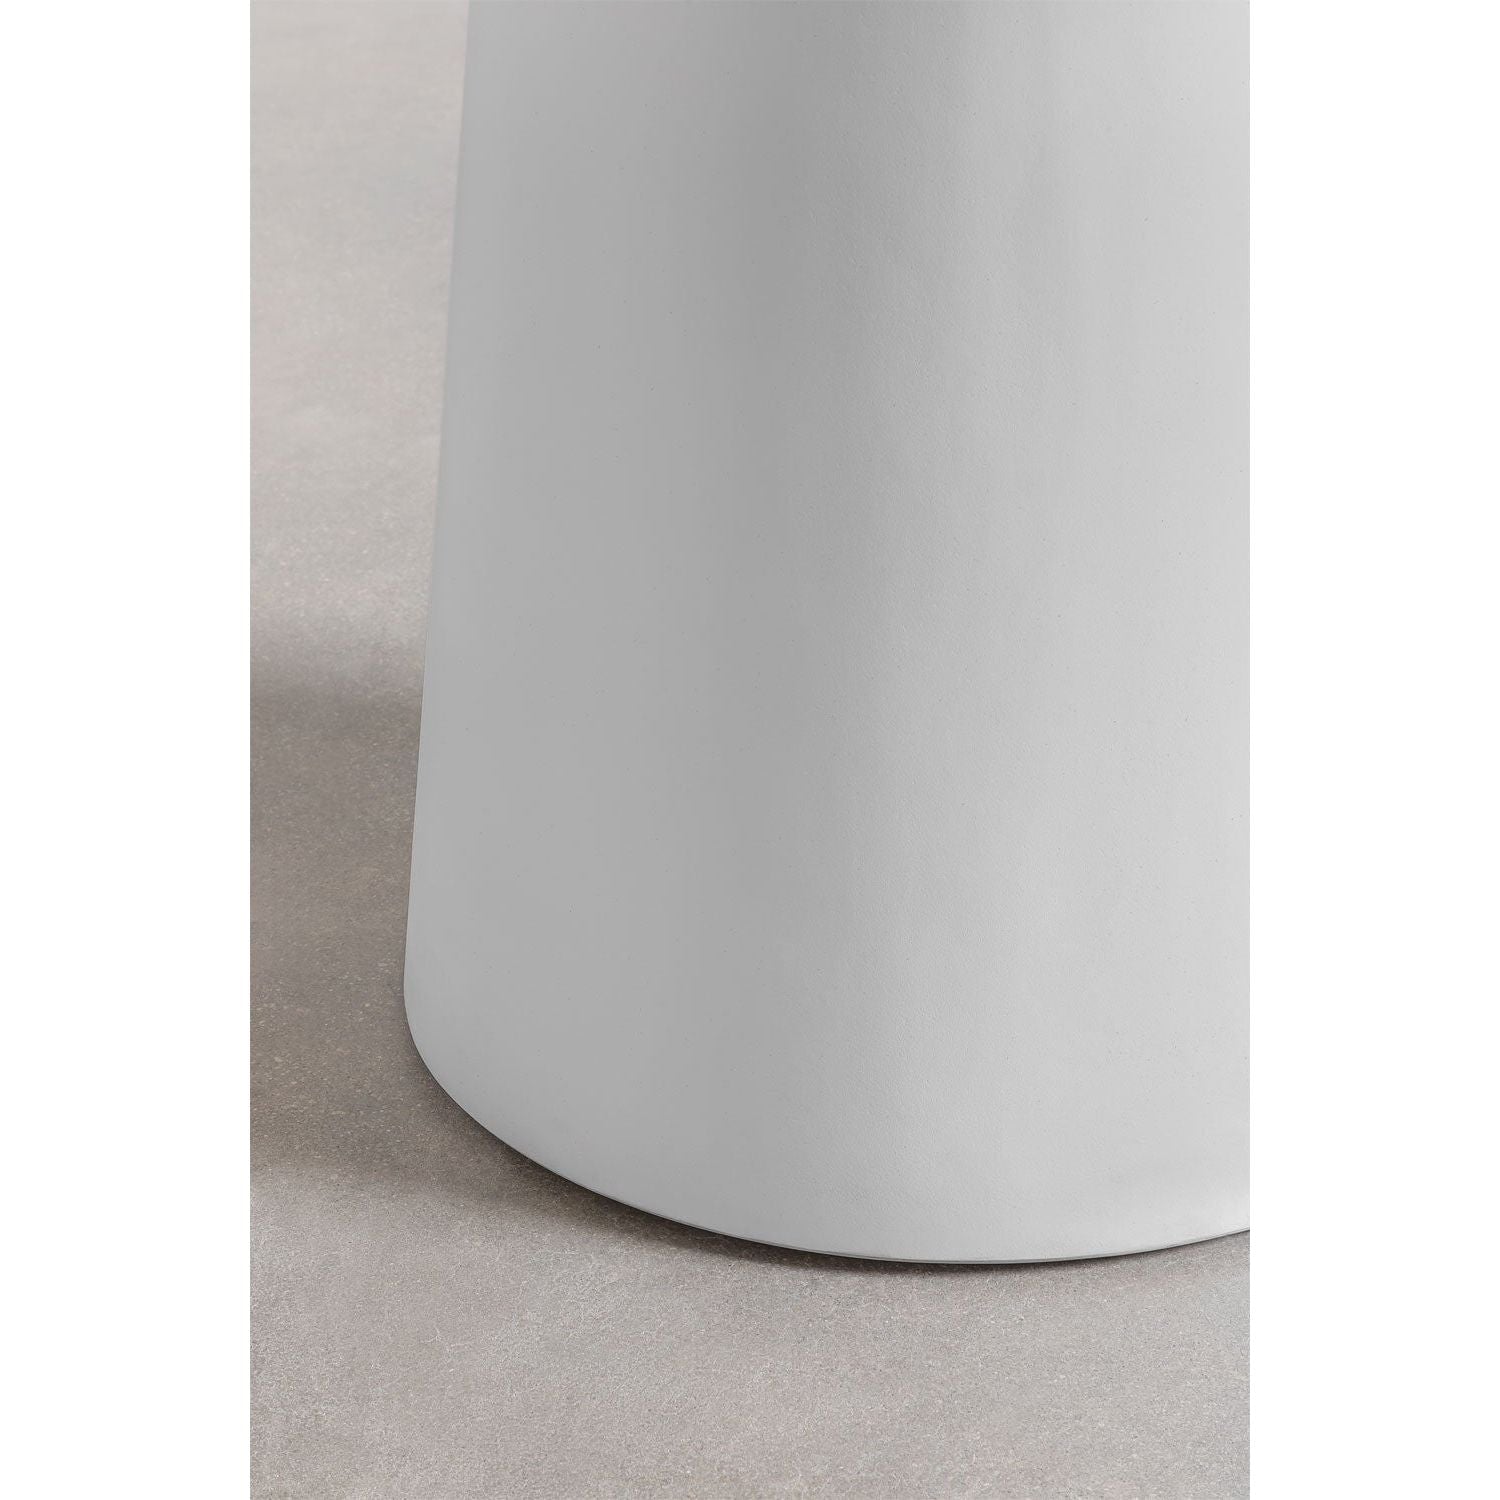 Apvalus cementinis ZELDA stalas (Ø120 cm), baltos spalvos